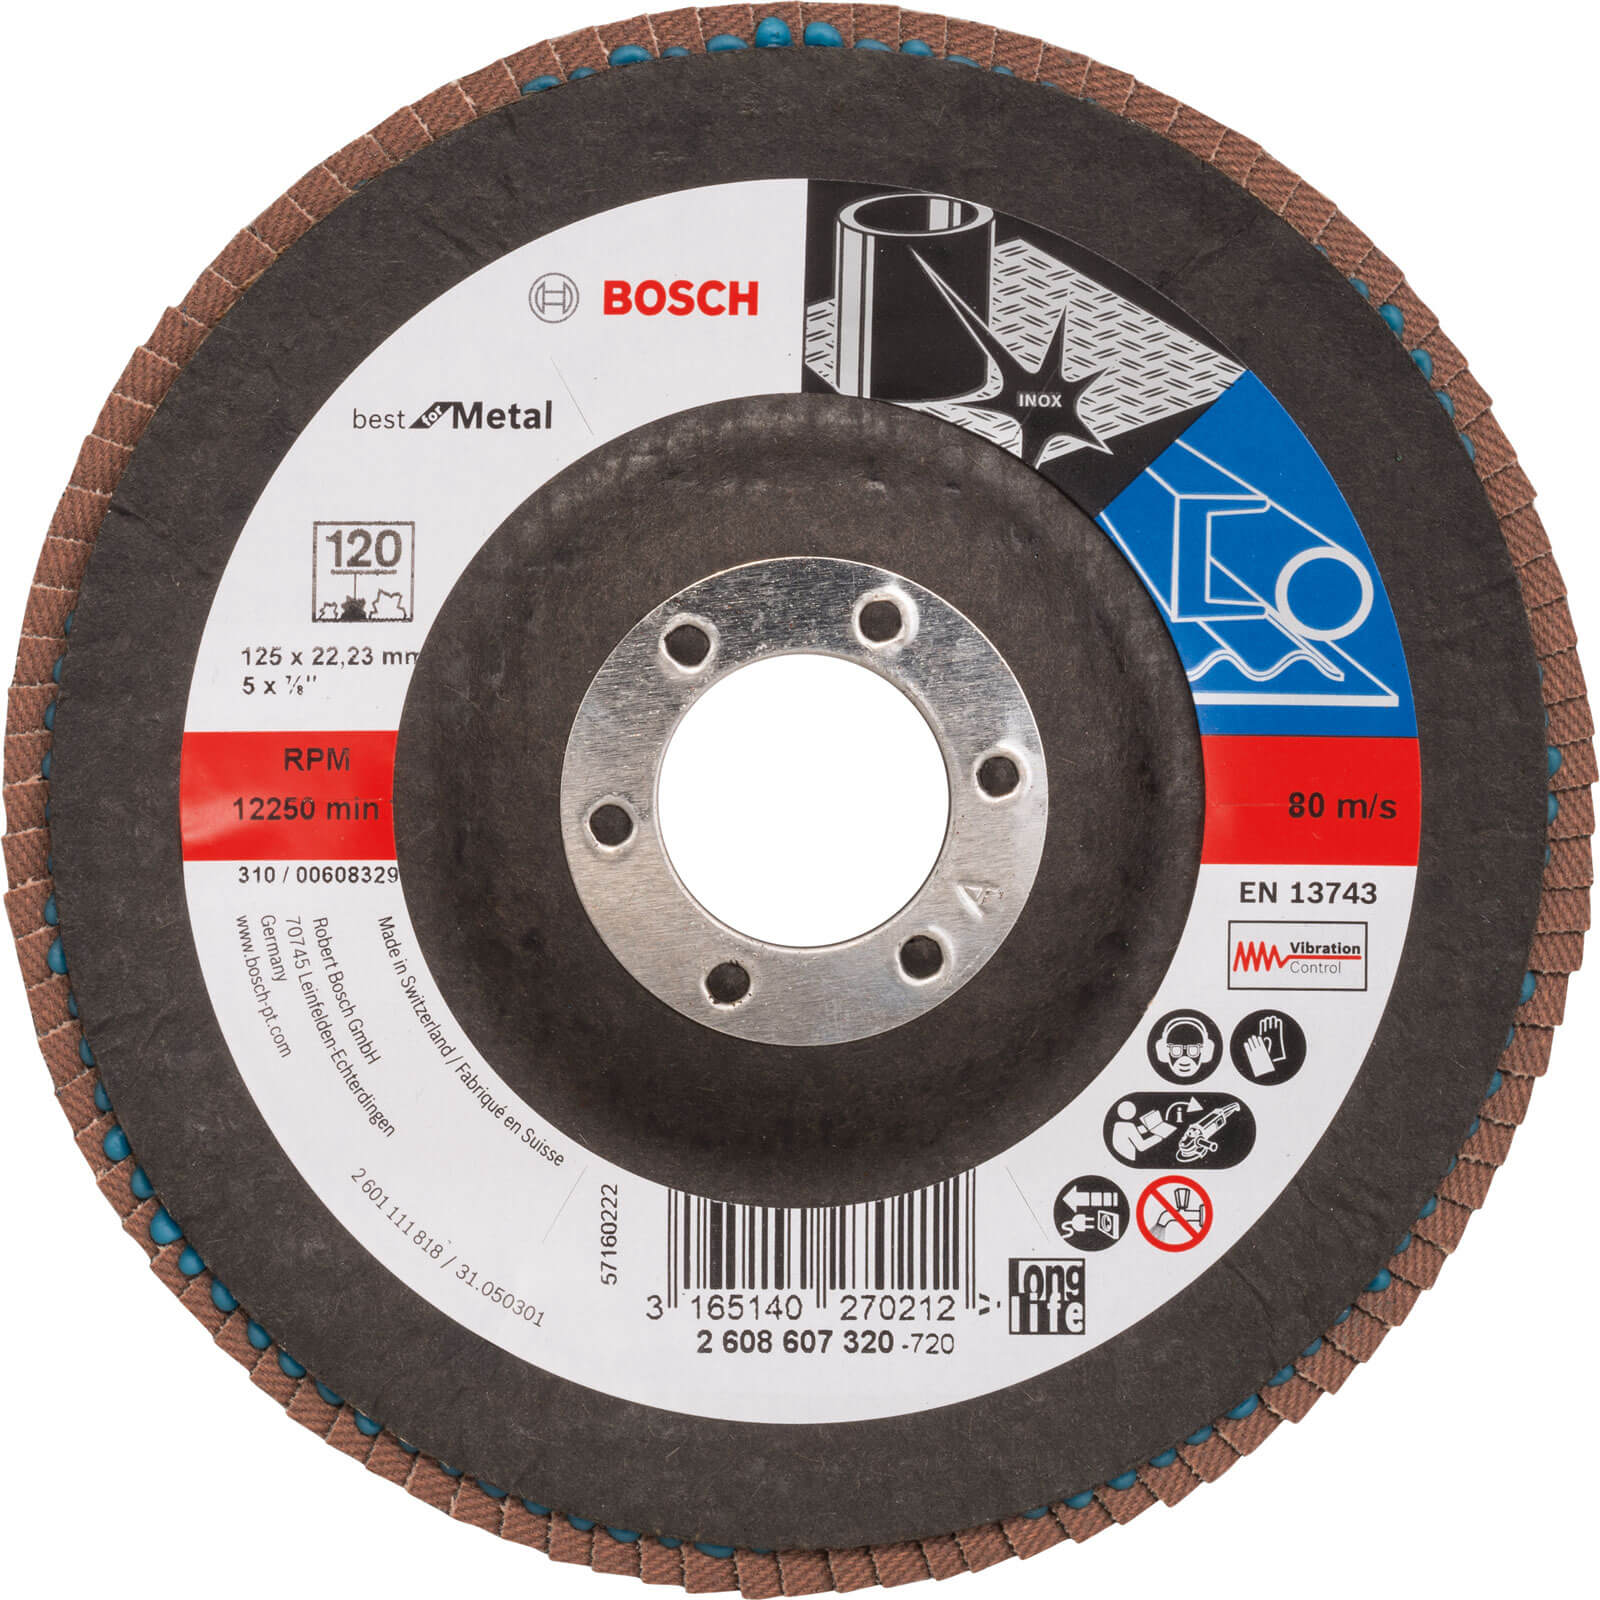 Image of Bosch Zirconium Abrasive Flap Disc 125mm 120g